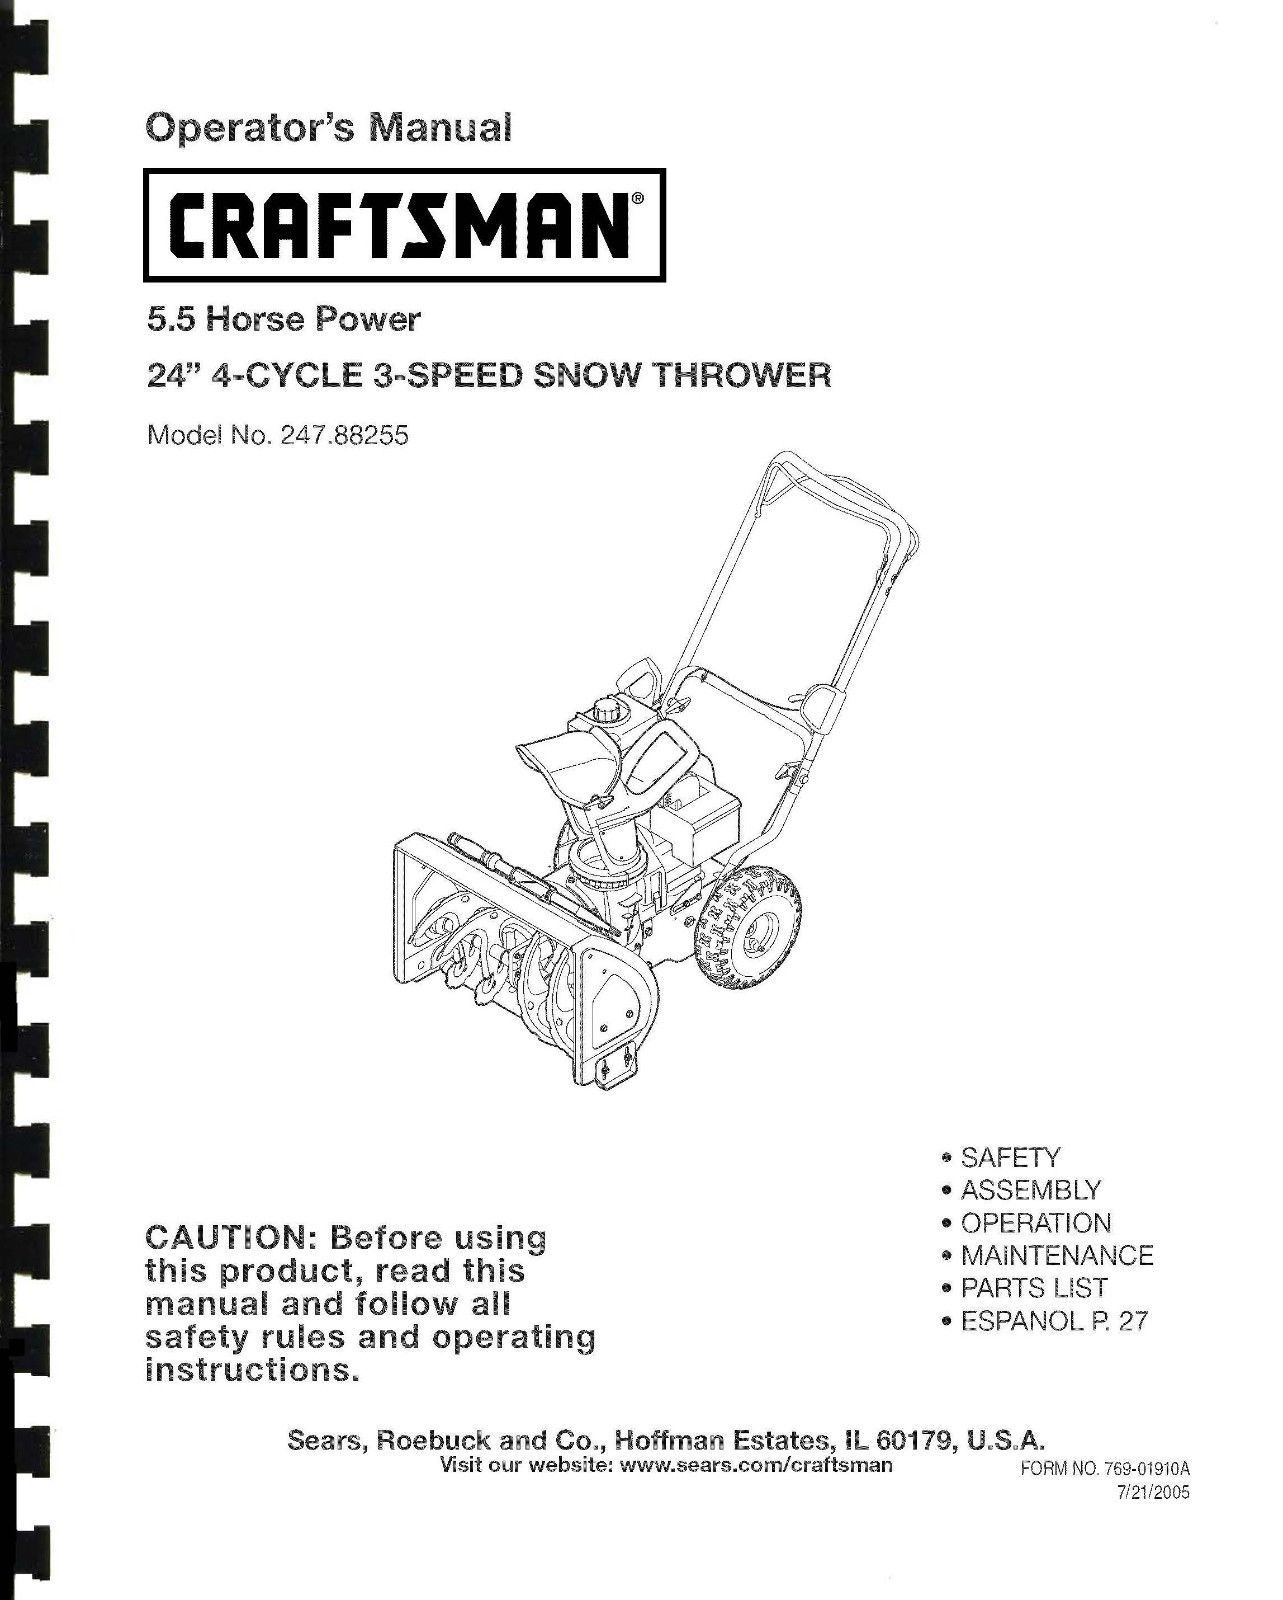 Craftsman Snow Thrower Operator's Manual Model No. 247.88255 - $12.50